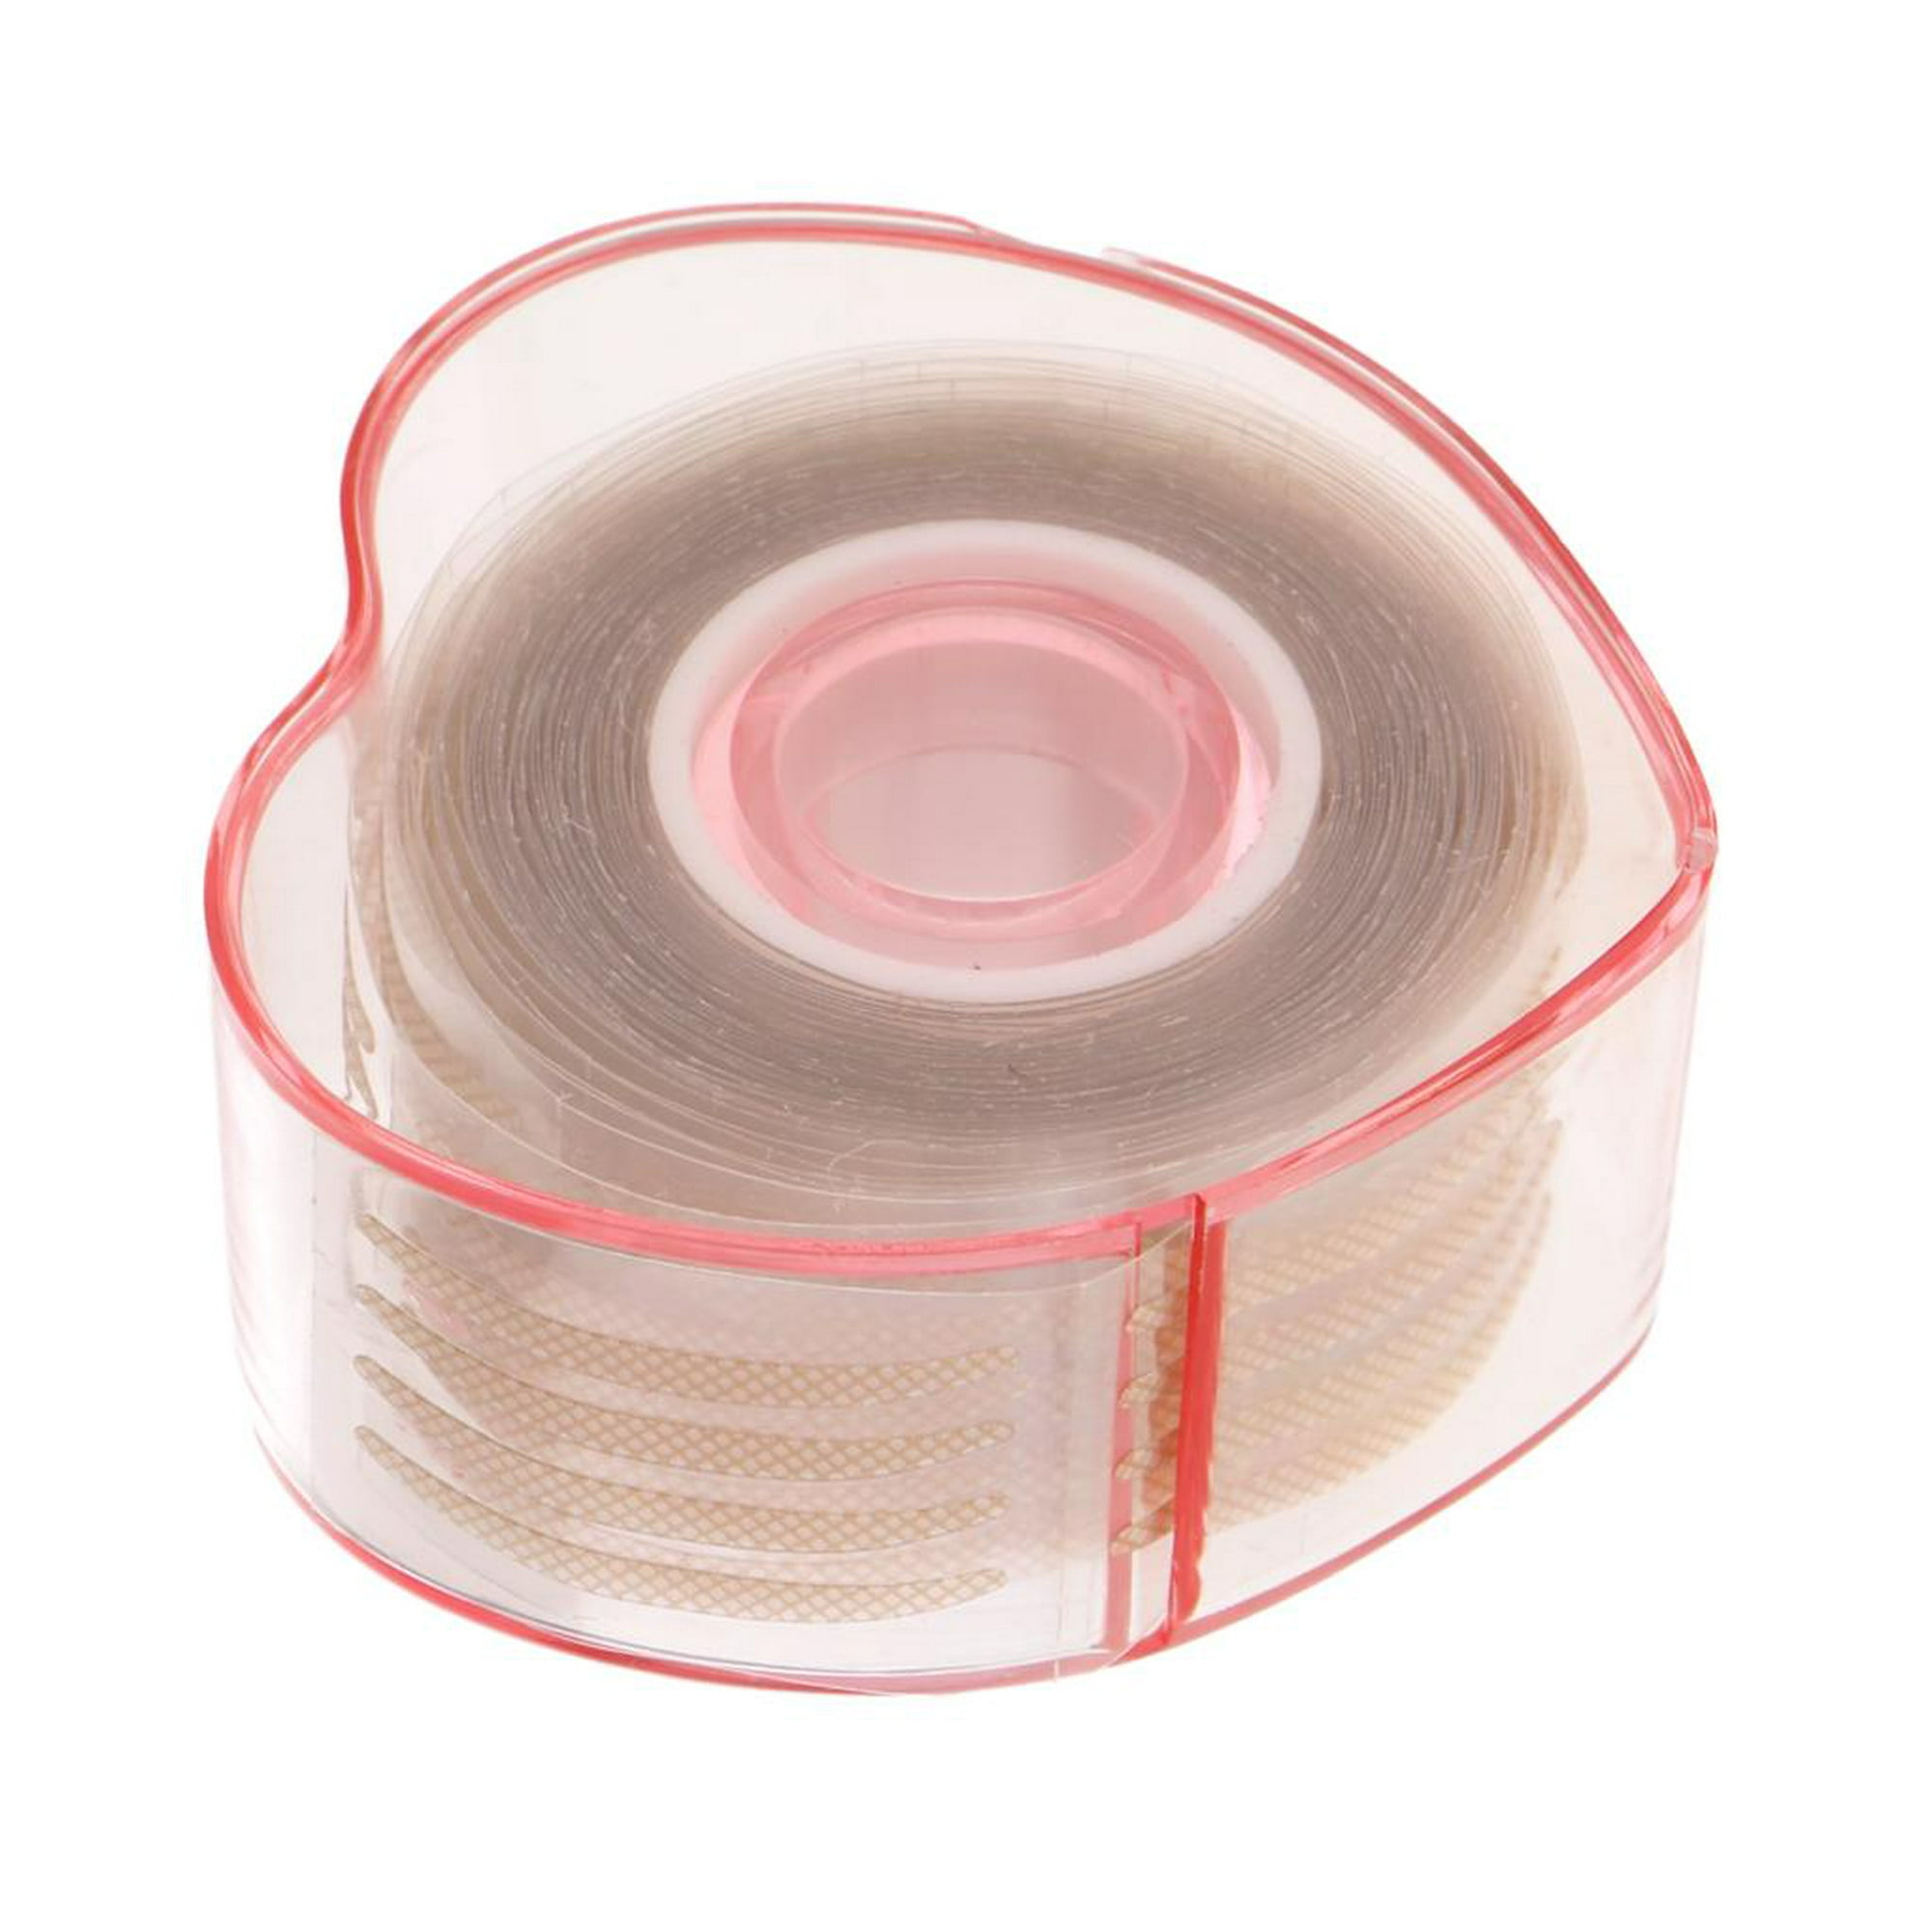 La mejor cinta adhesiva para quitar verrugas